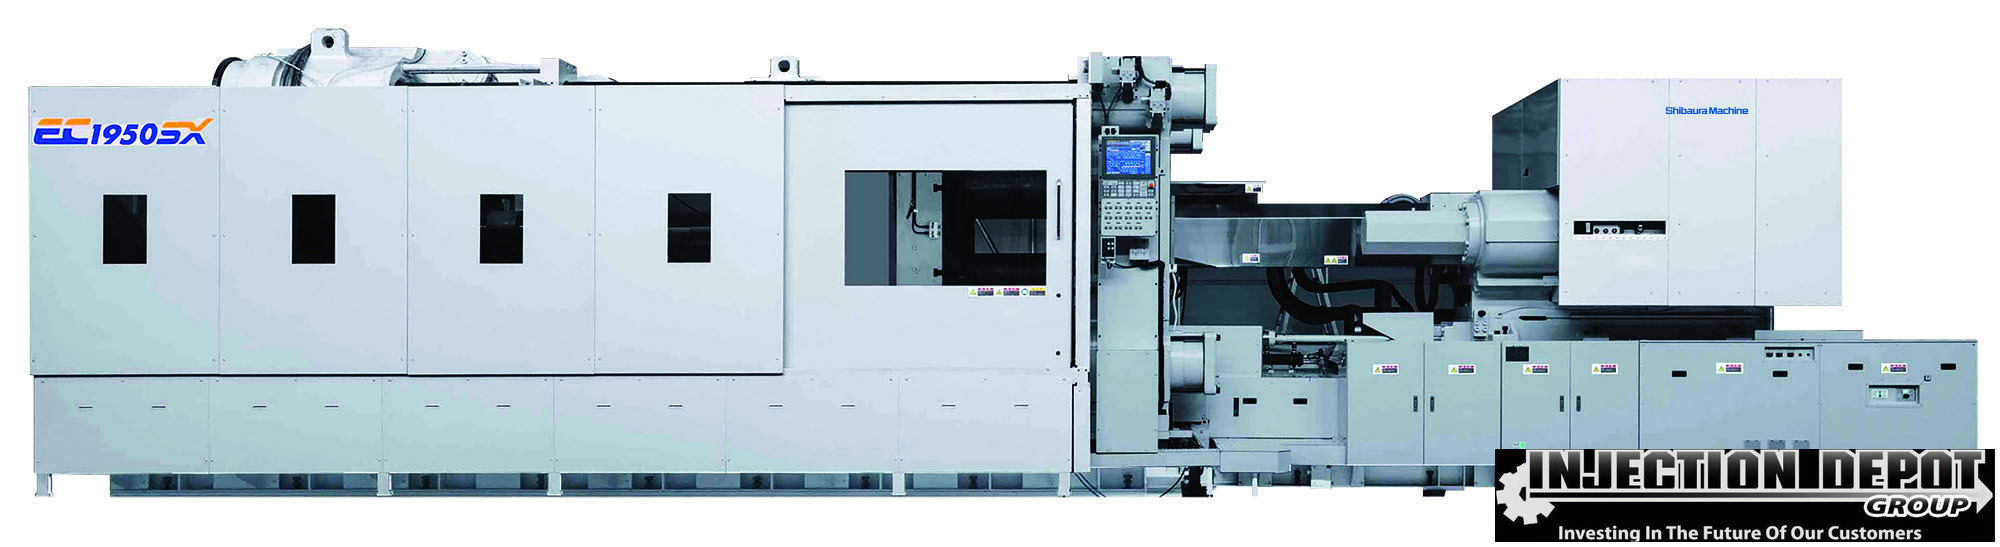 SHIBAURA MACHINE EC1950SXIIIV70-i155 B Horizontal Injection Moulding Machines | INJECTION DEPOT GROUP